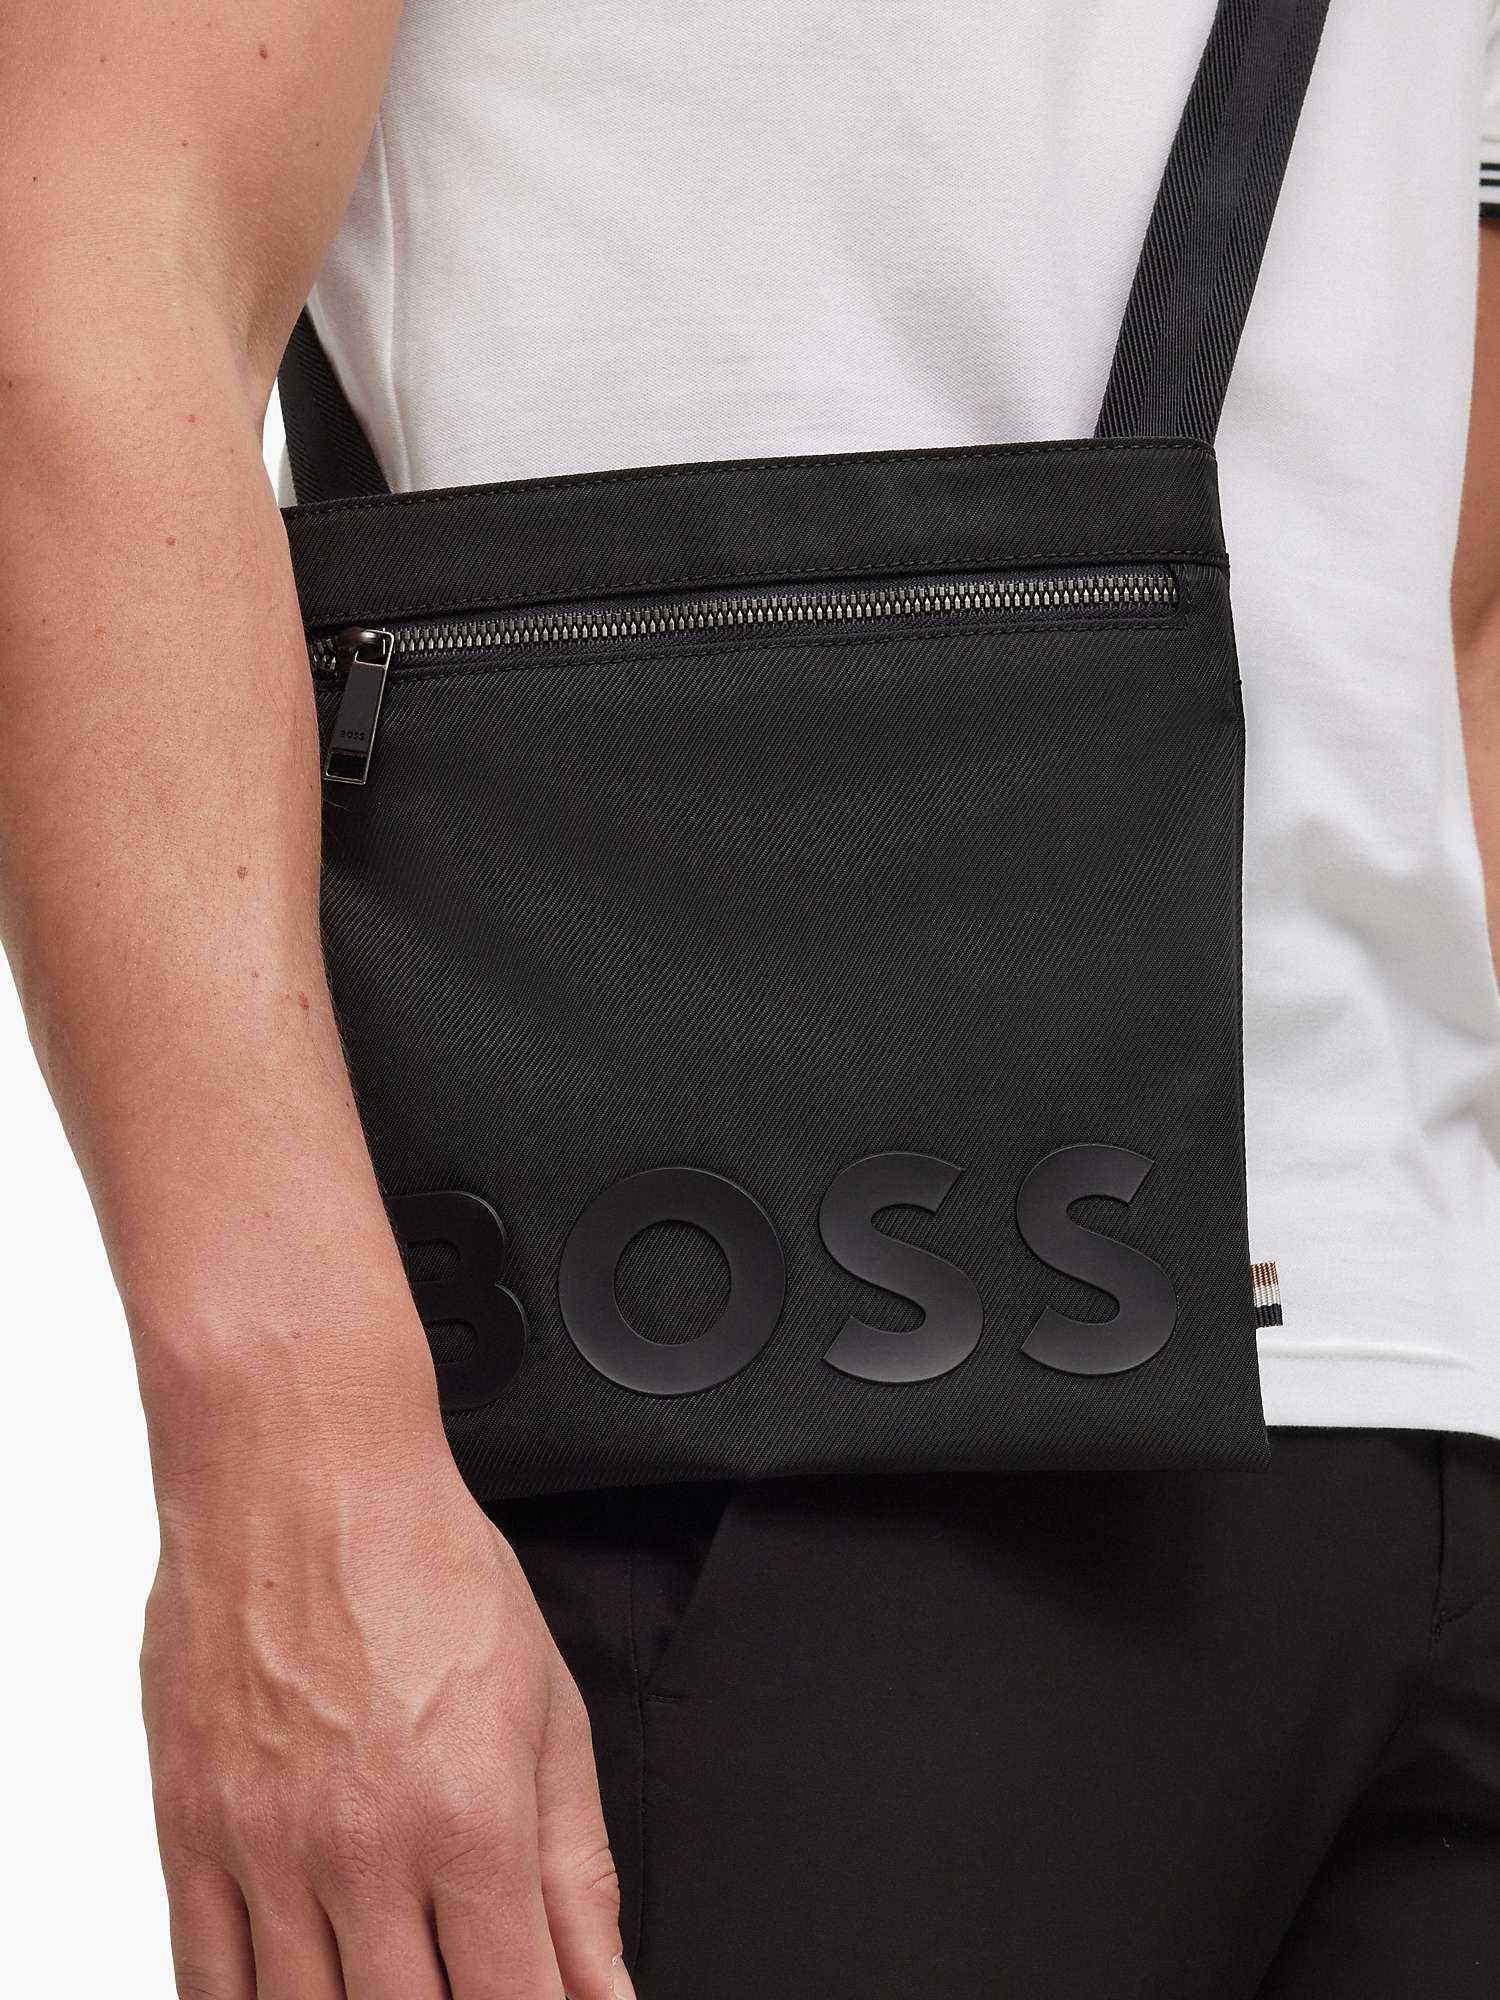 Buy BOSS Catch 2.0 Crossbody Bag, Black Online at johnlewis.com